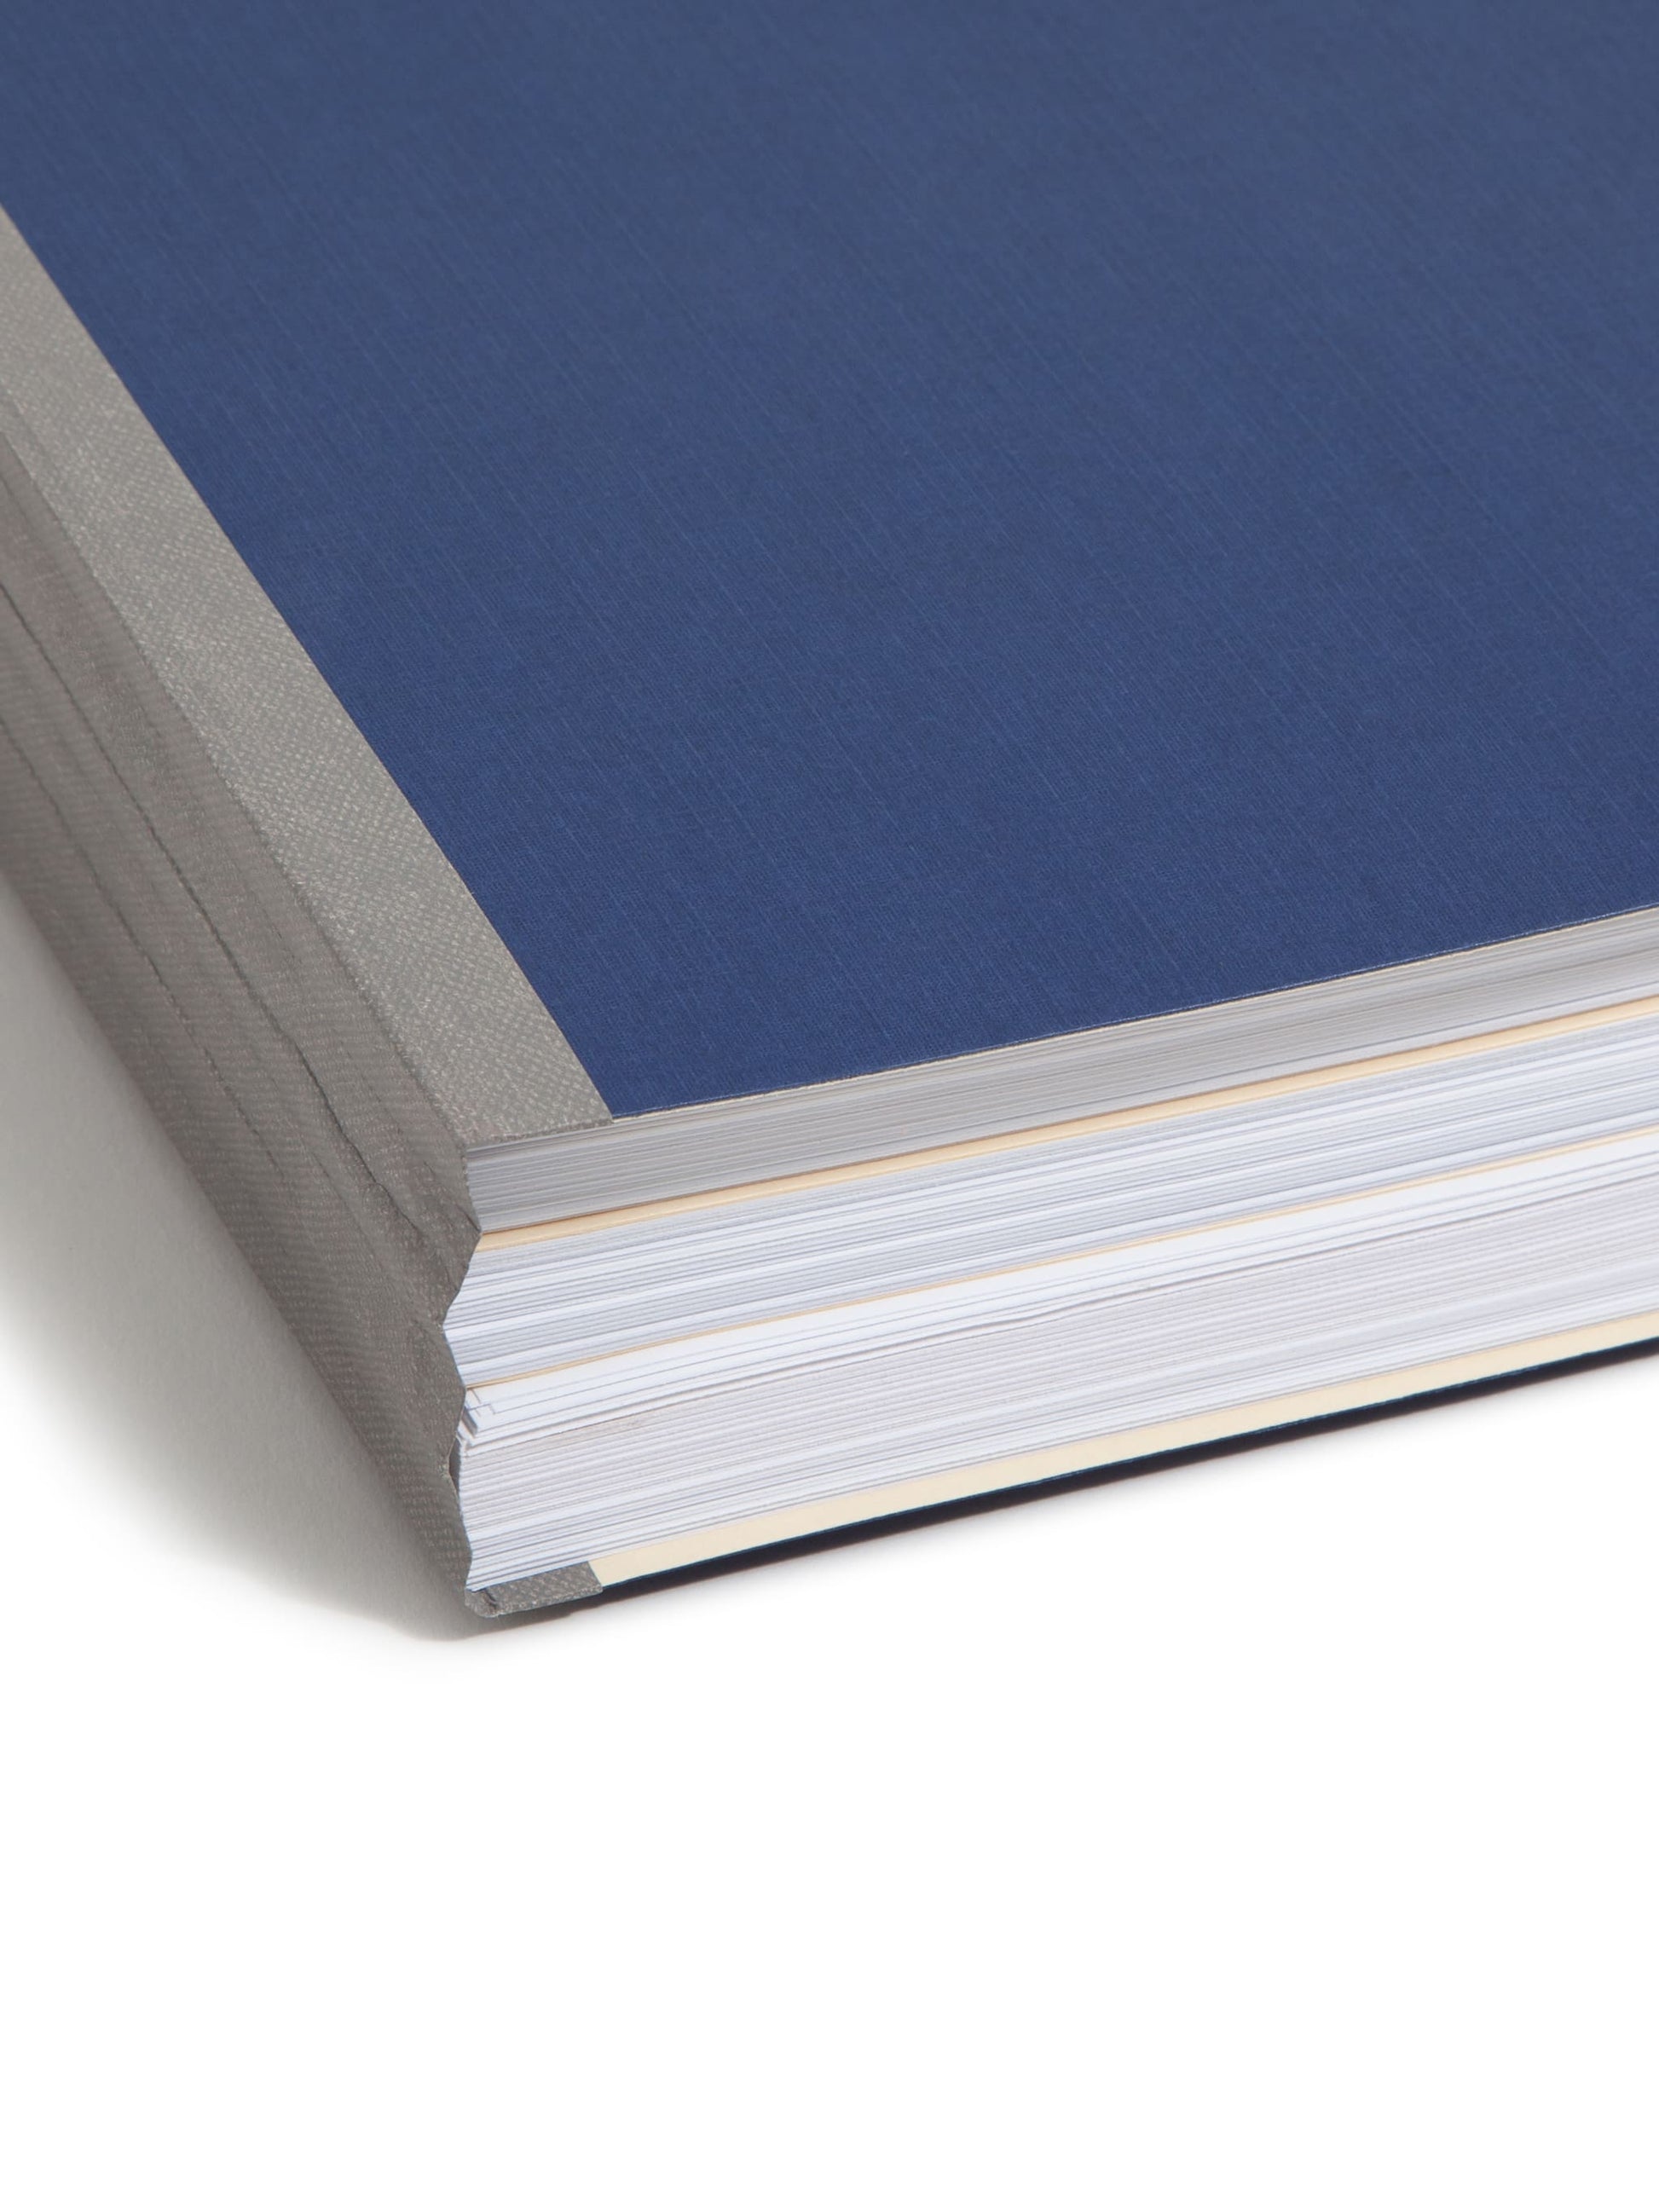 SuperTab® Classification File Folders, Dark Blue Color, Letter Size, Set of 0, 30086486140103